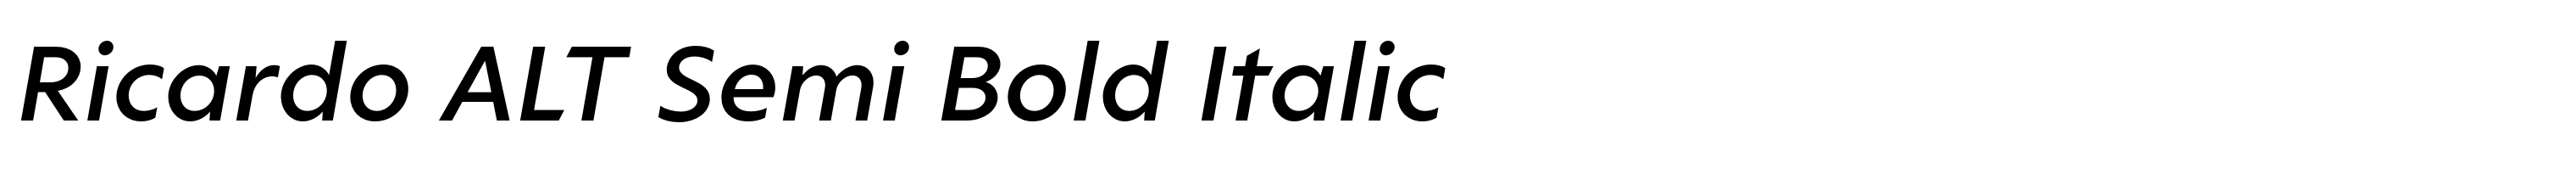 Ricardo ALT Semi Bold Italic